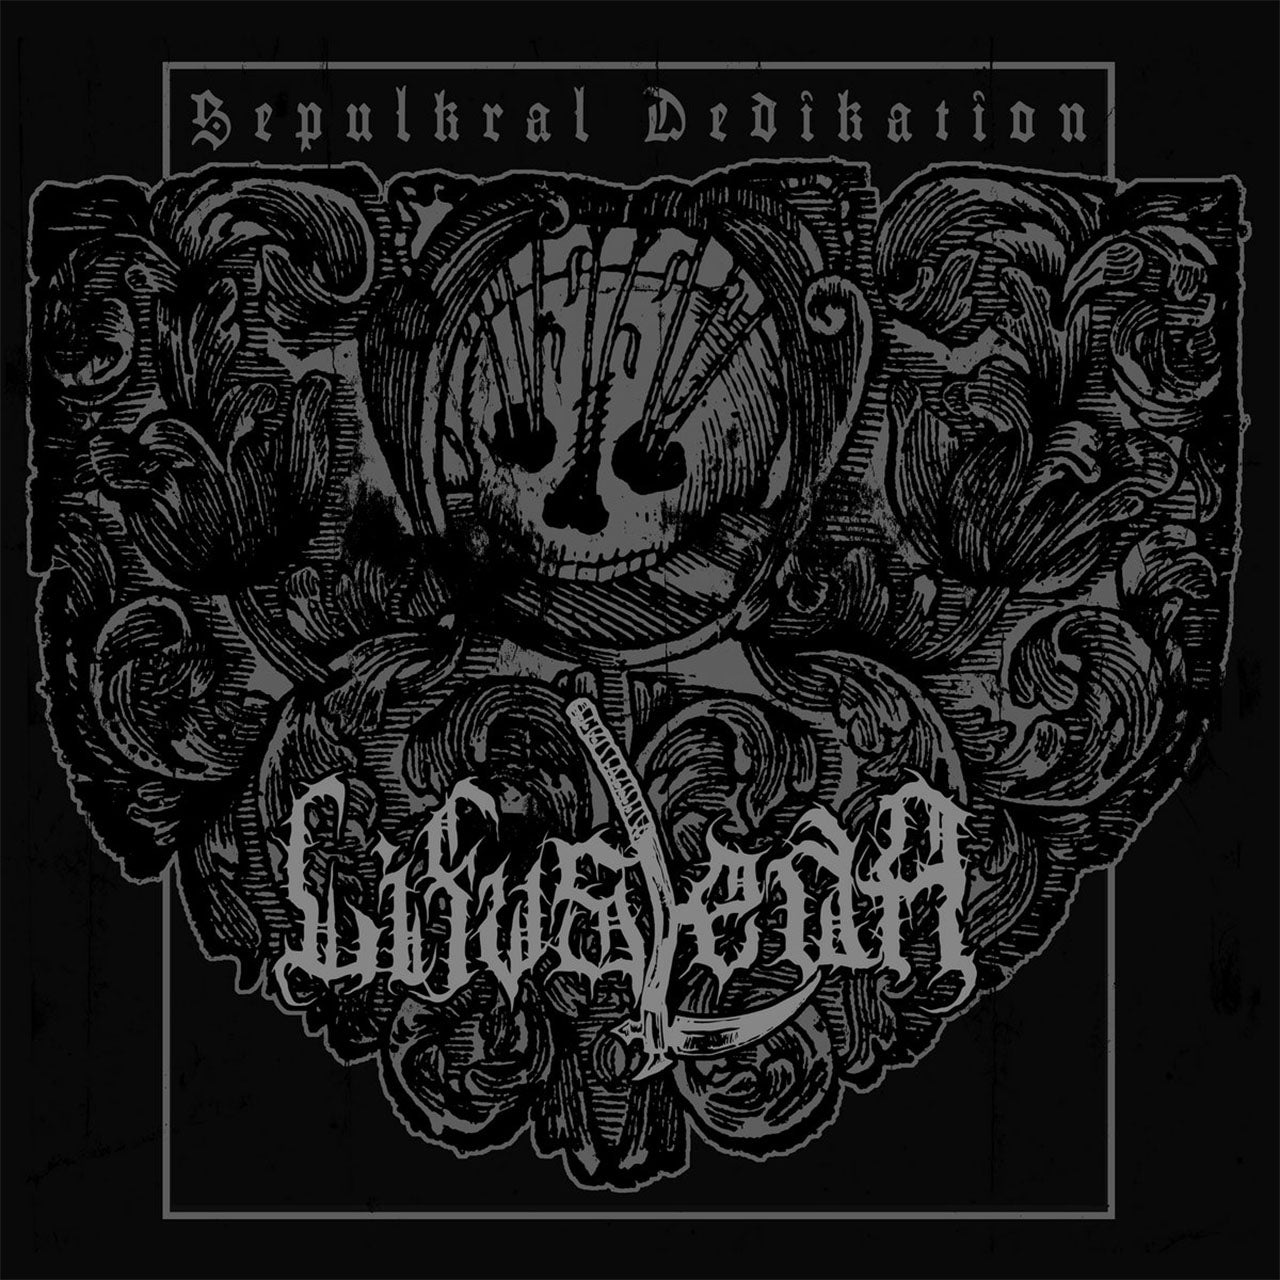 Lifvsleda - Sepulkral Dedikation (Digipak CD)